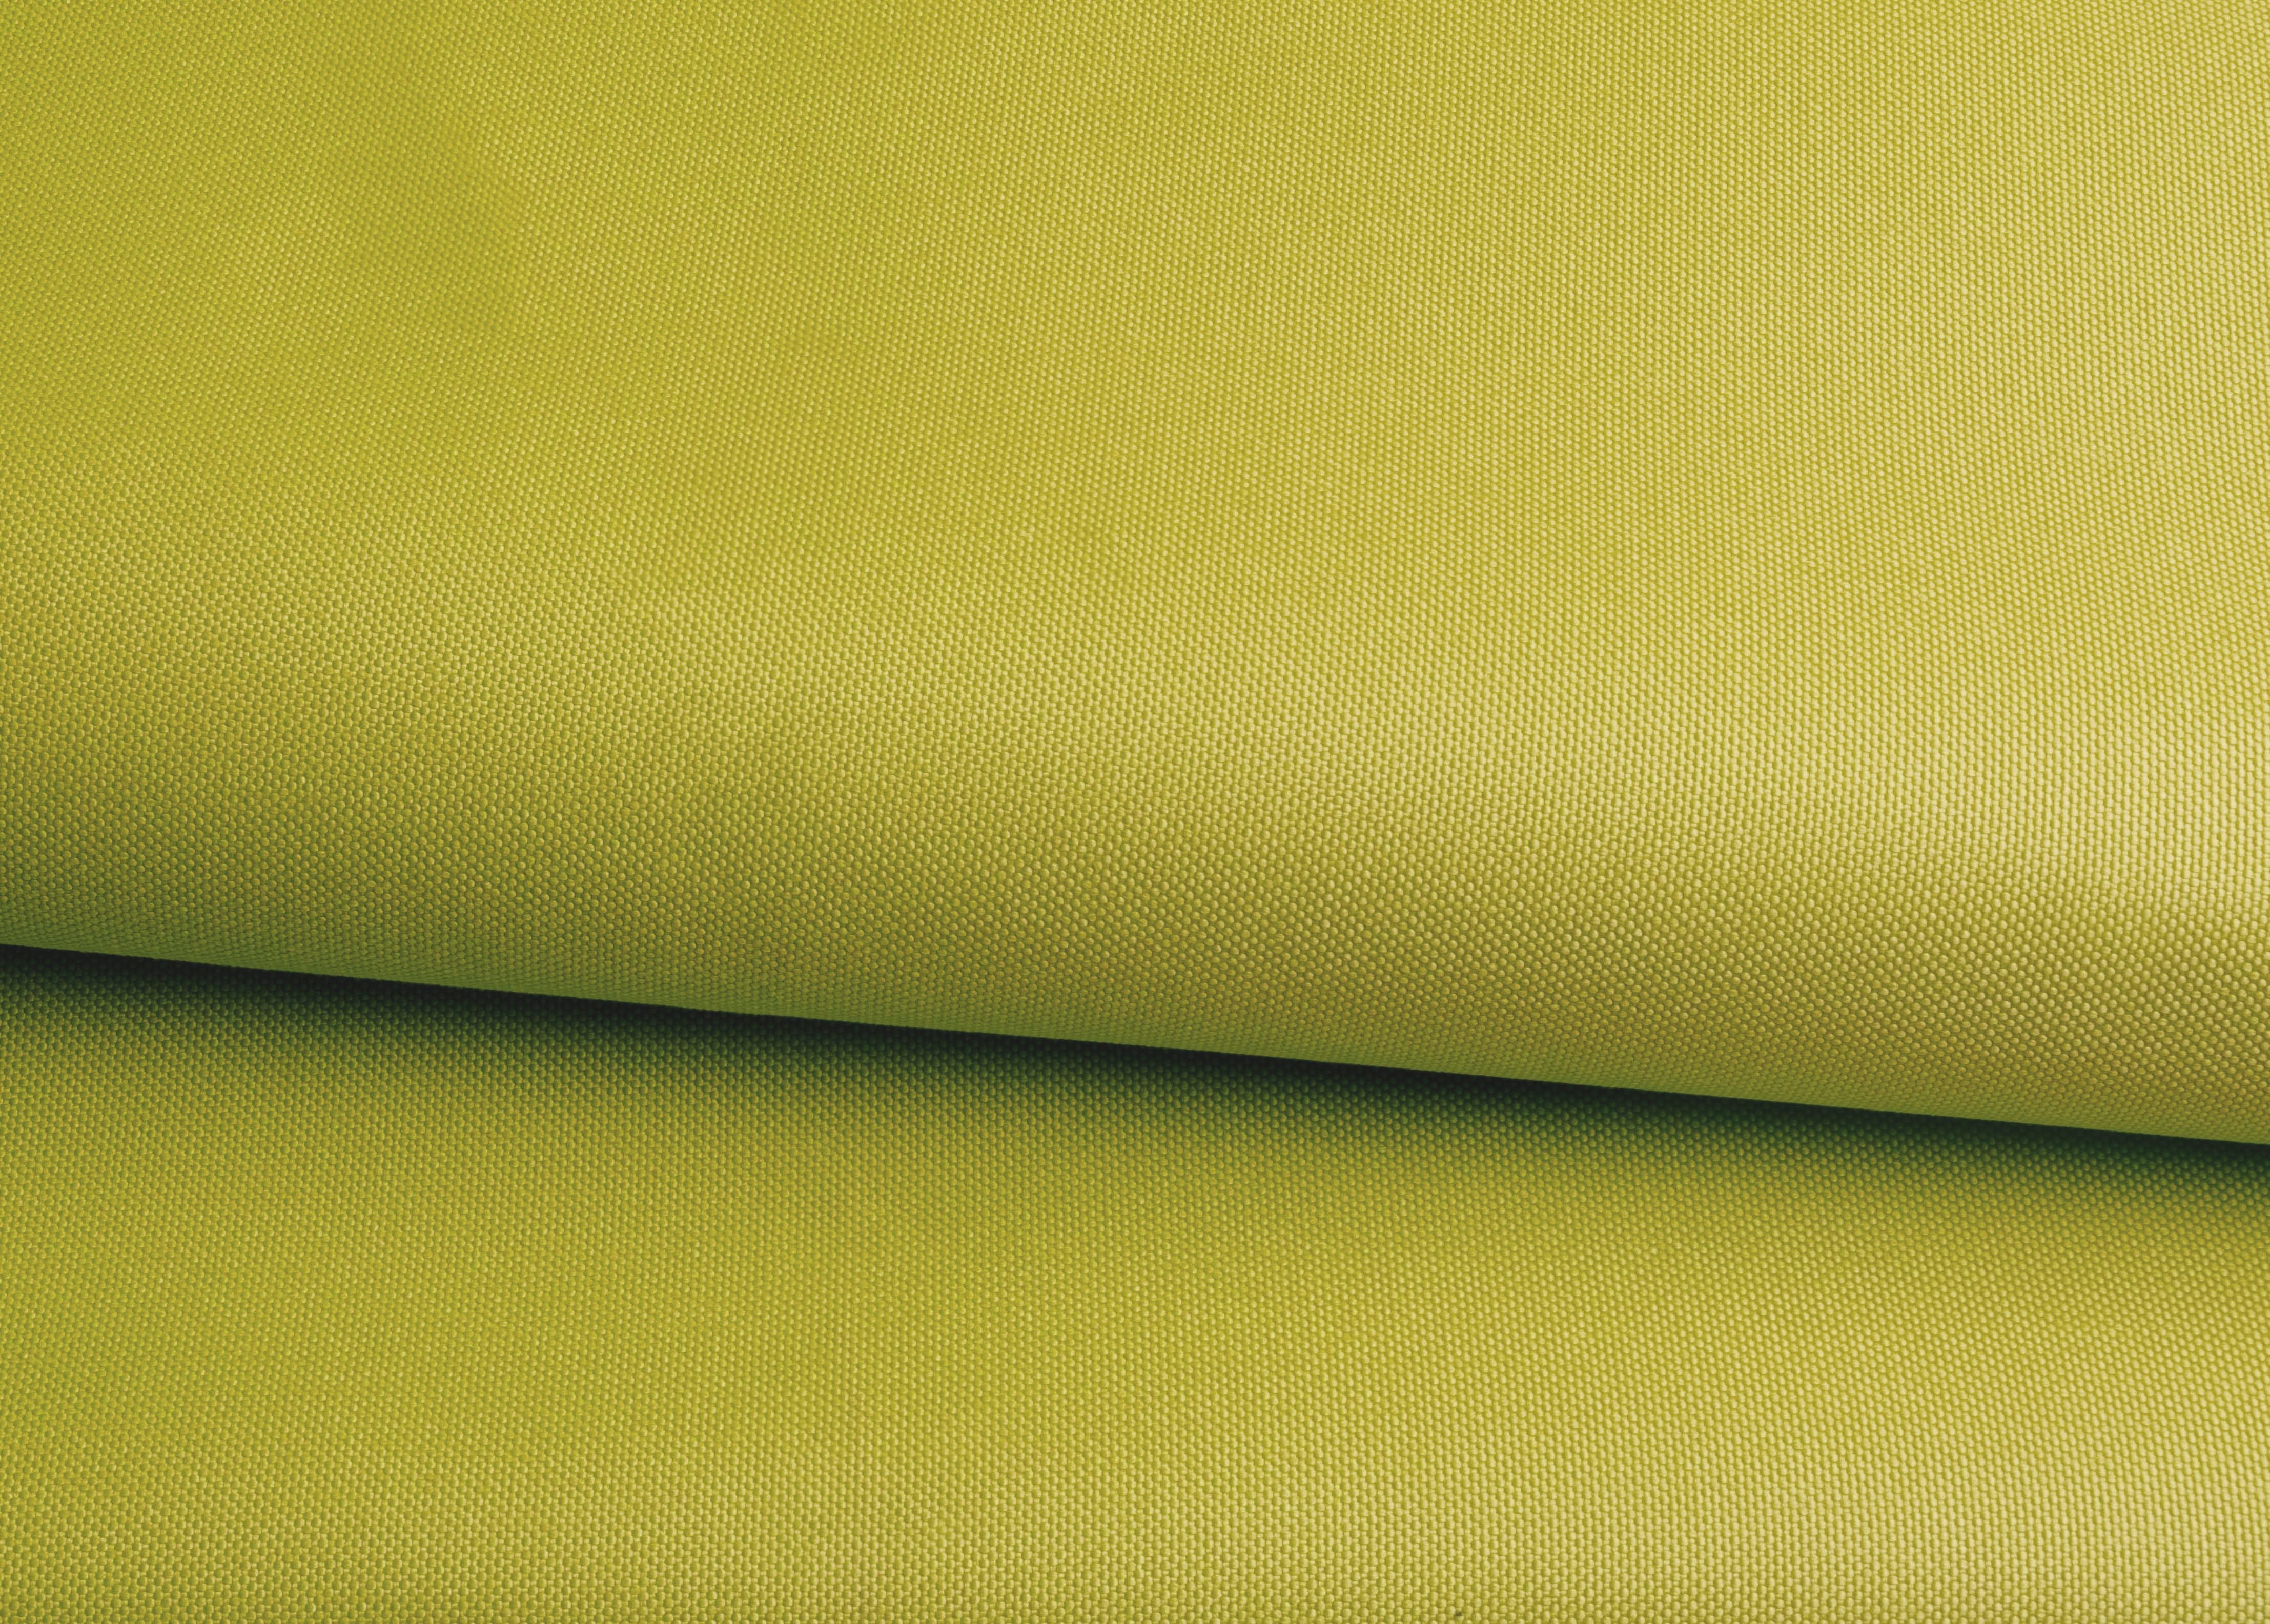 Sorrento Plain Sage Green Outdoor Fabric